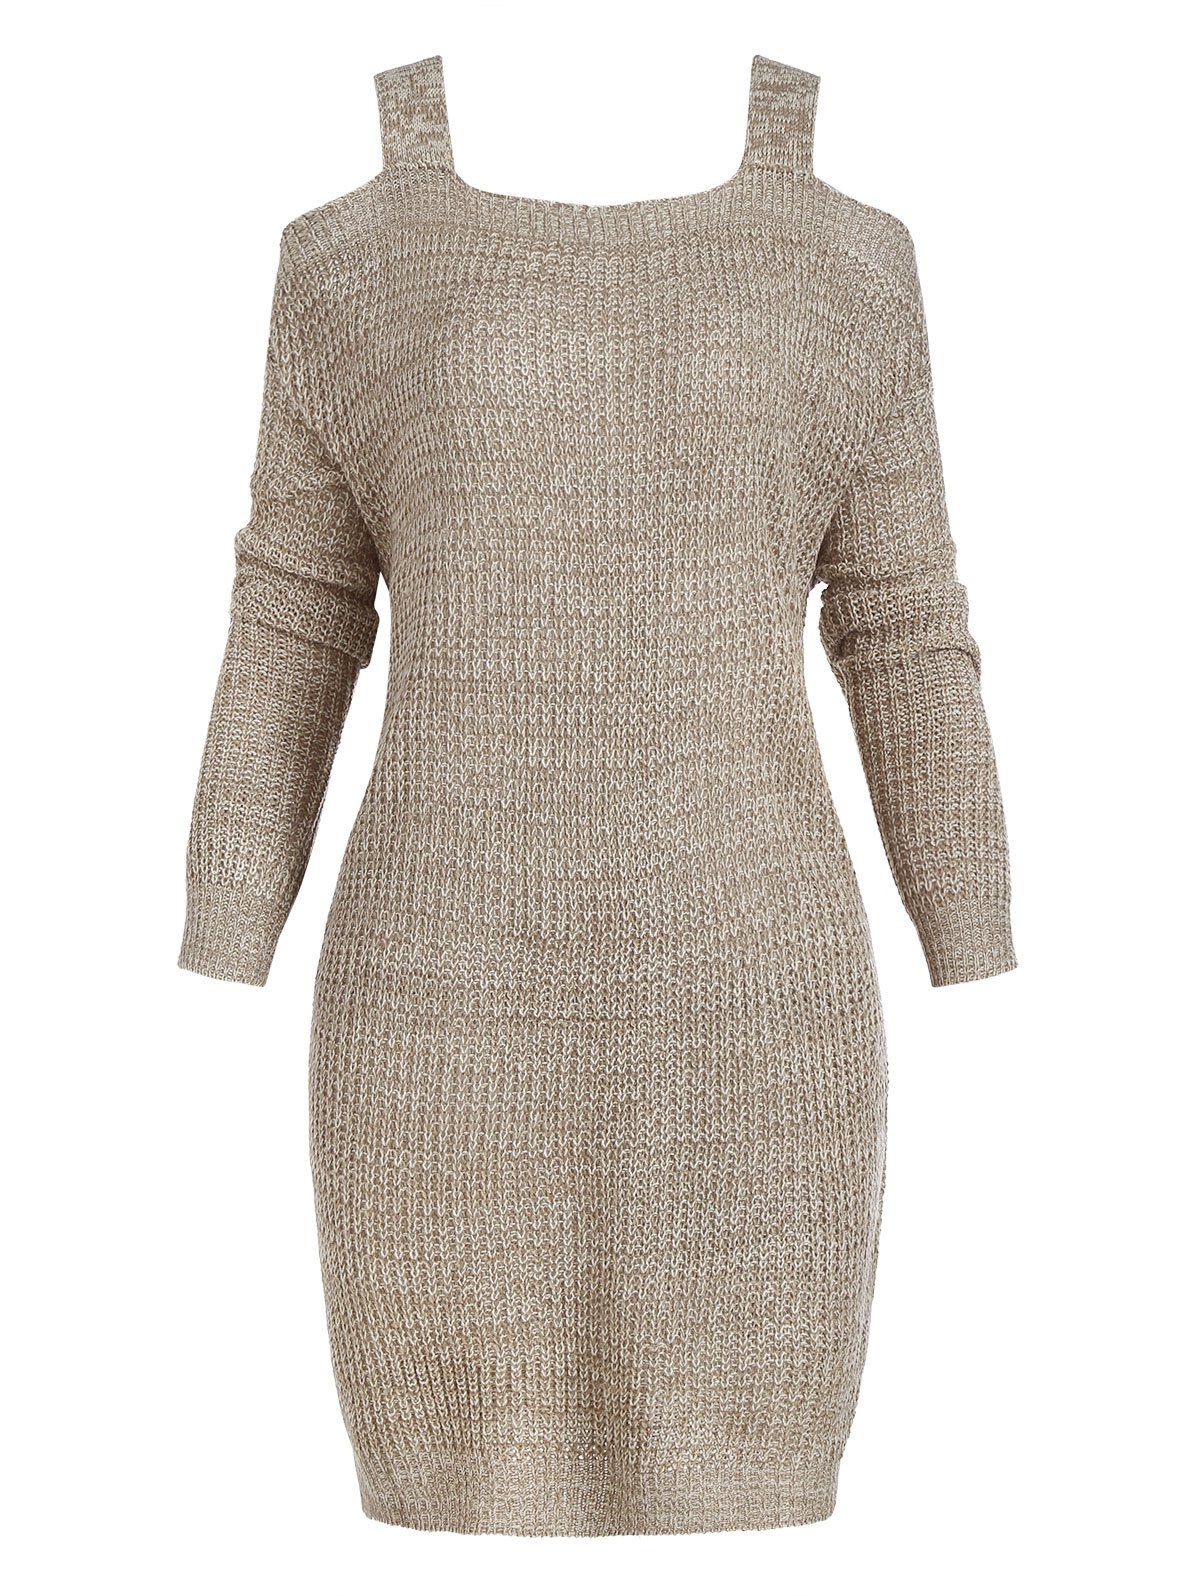 Cold Shoulder Mini Sweater Dress - LIGHT COFFEE M